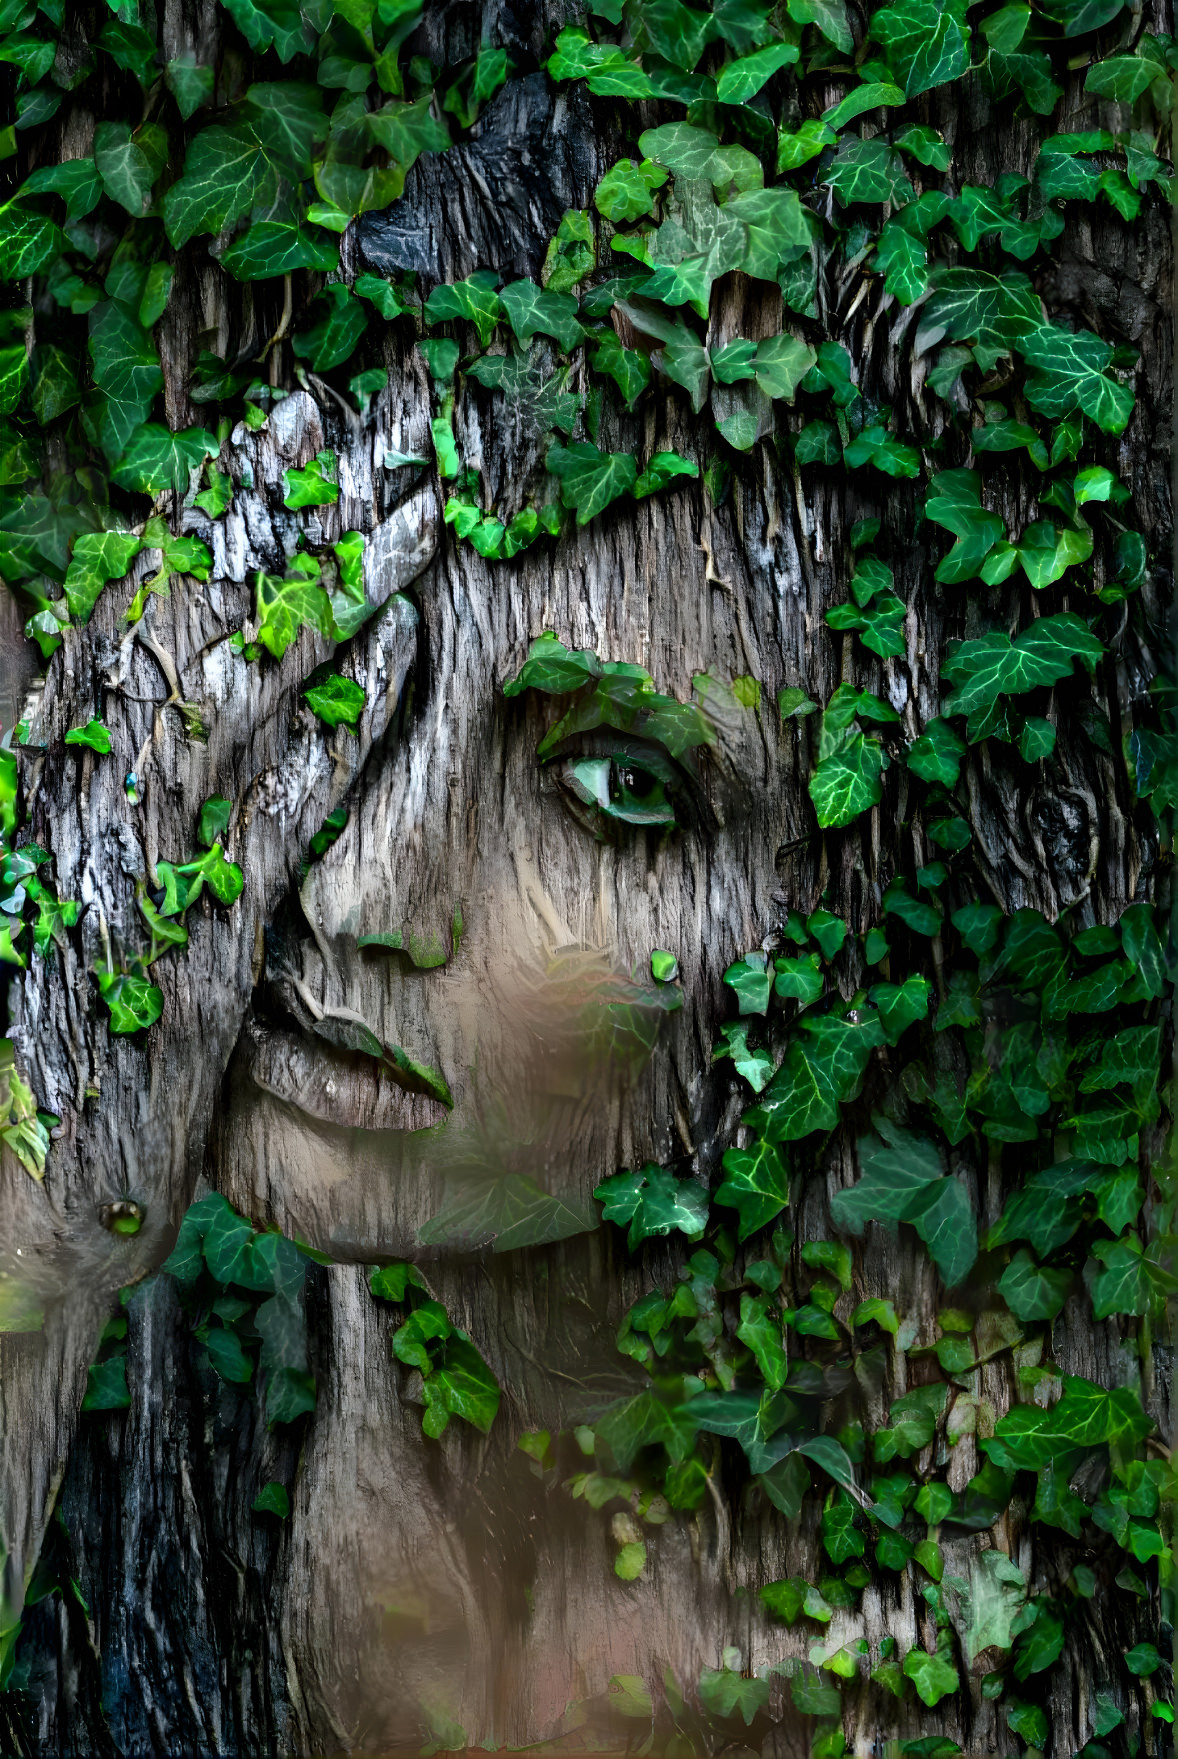 Tree Goddess